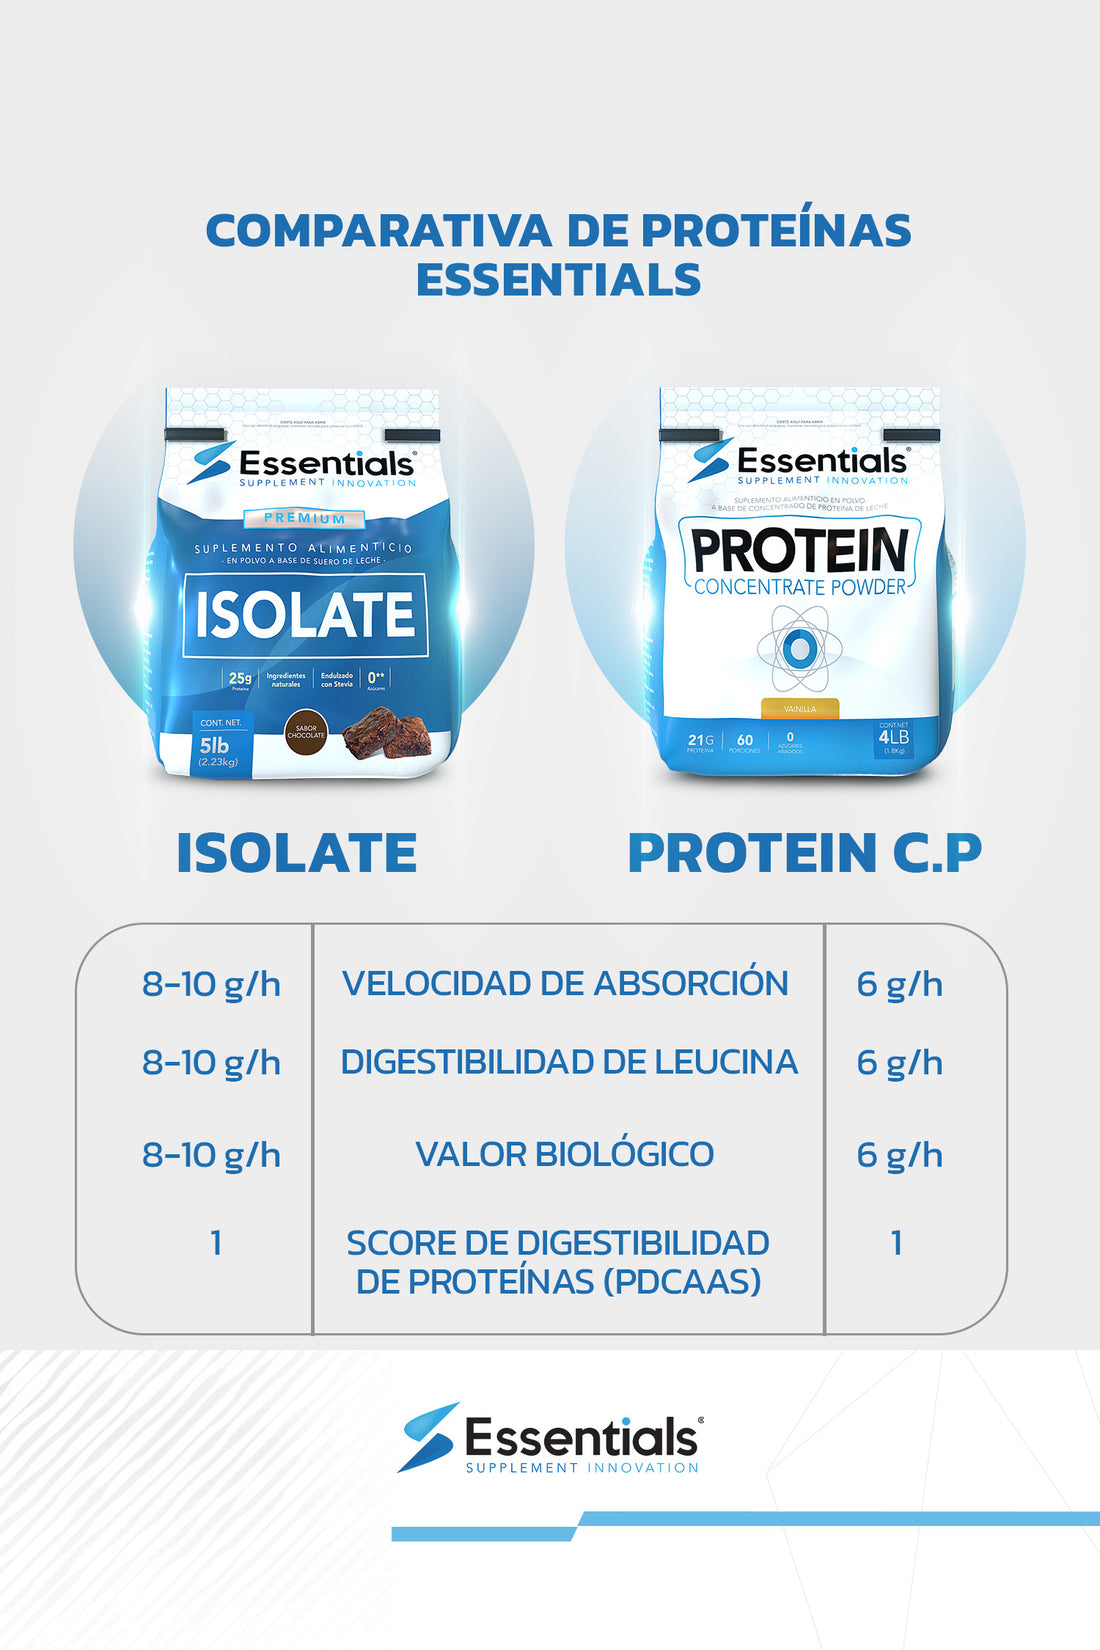 Isolate - Proteína aislada 5lb